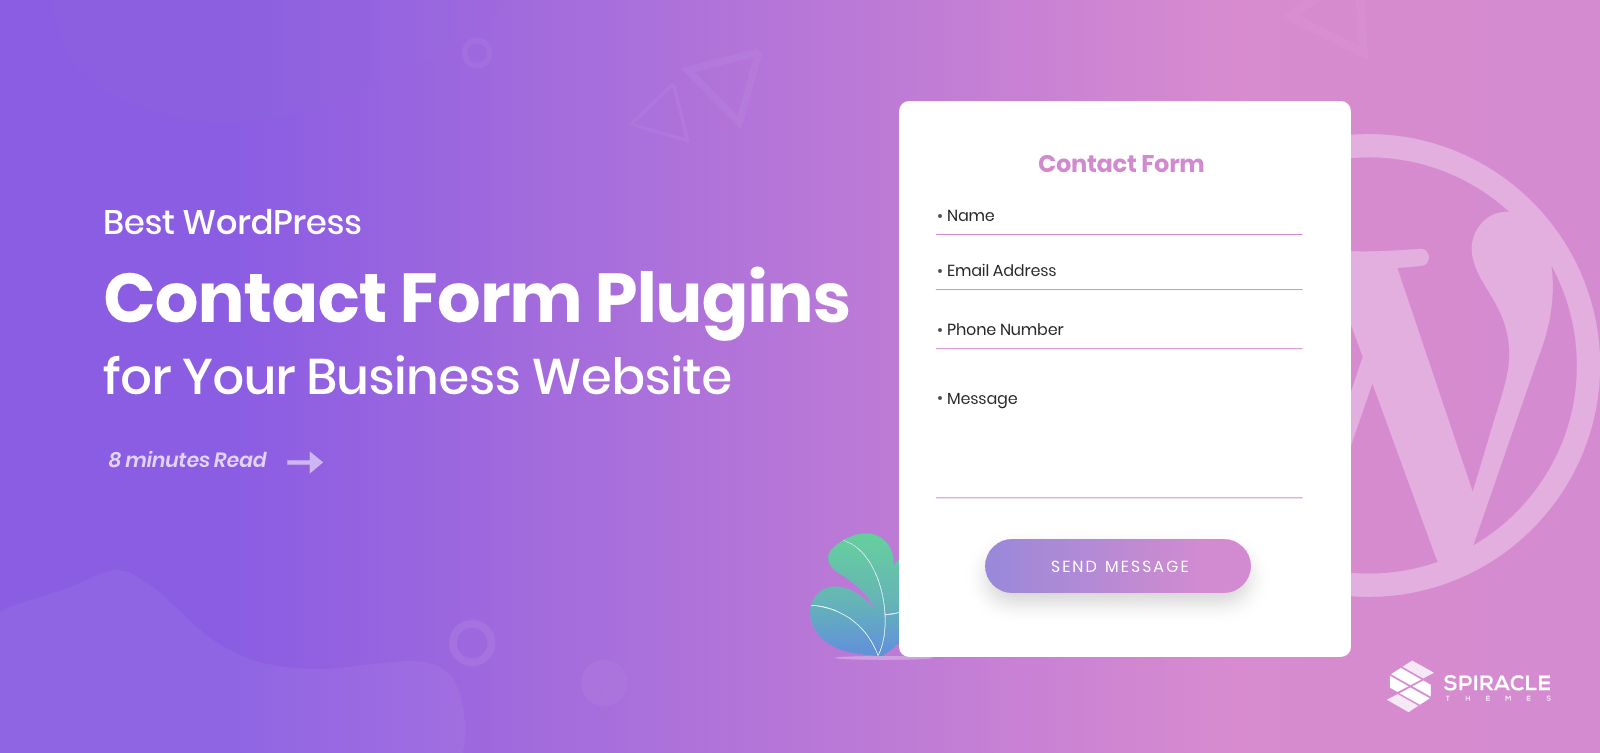 Wordpress Contact Form Plugin Development Tutorial